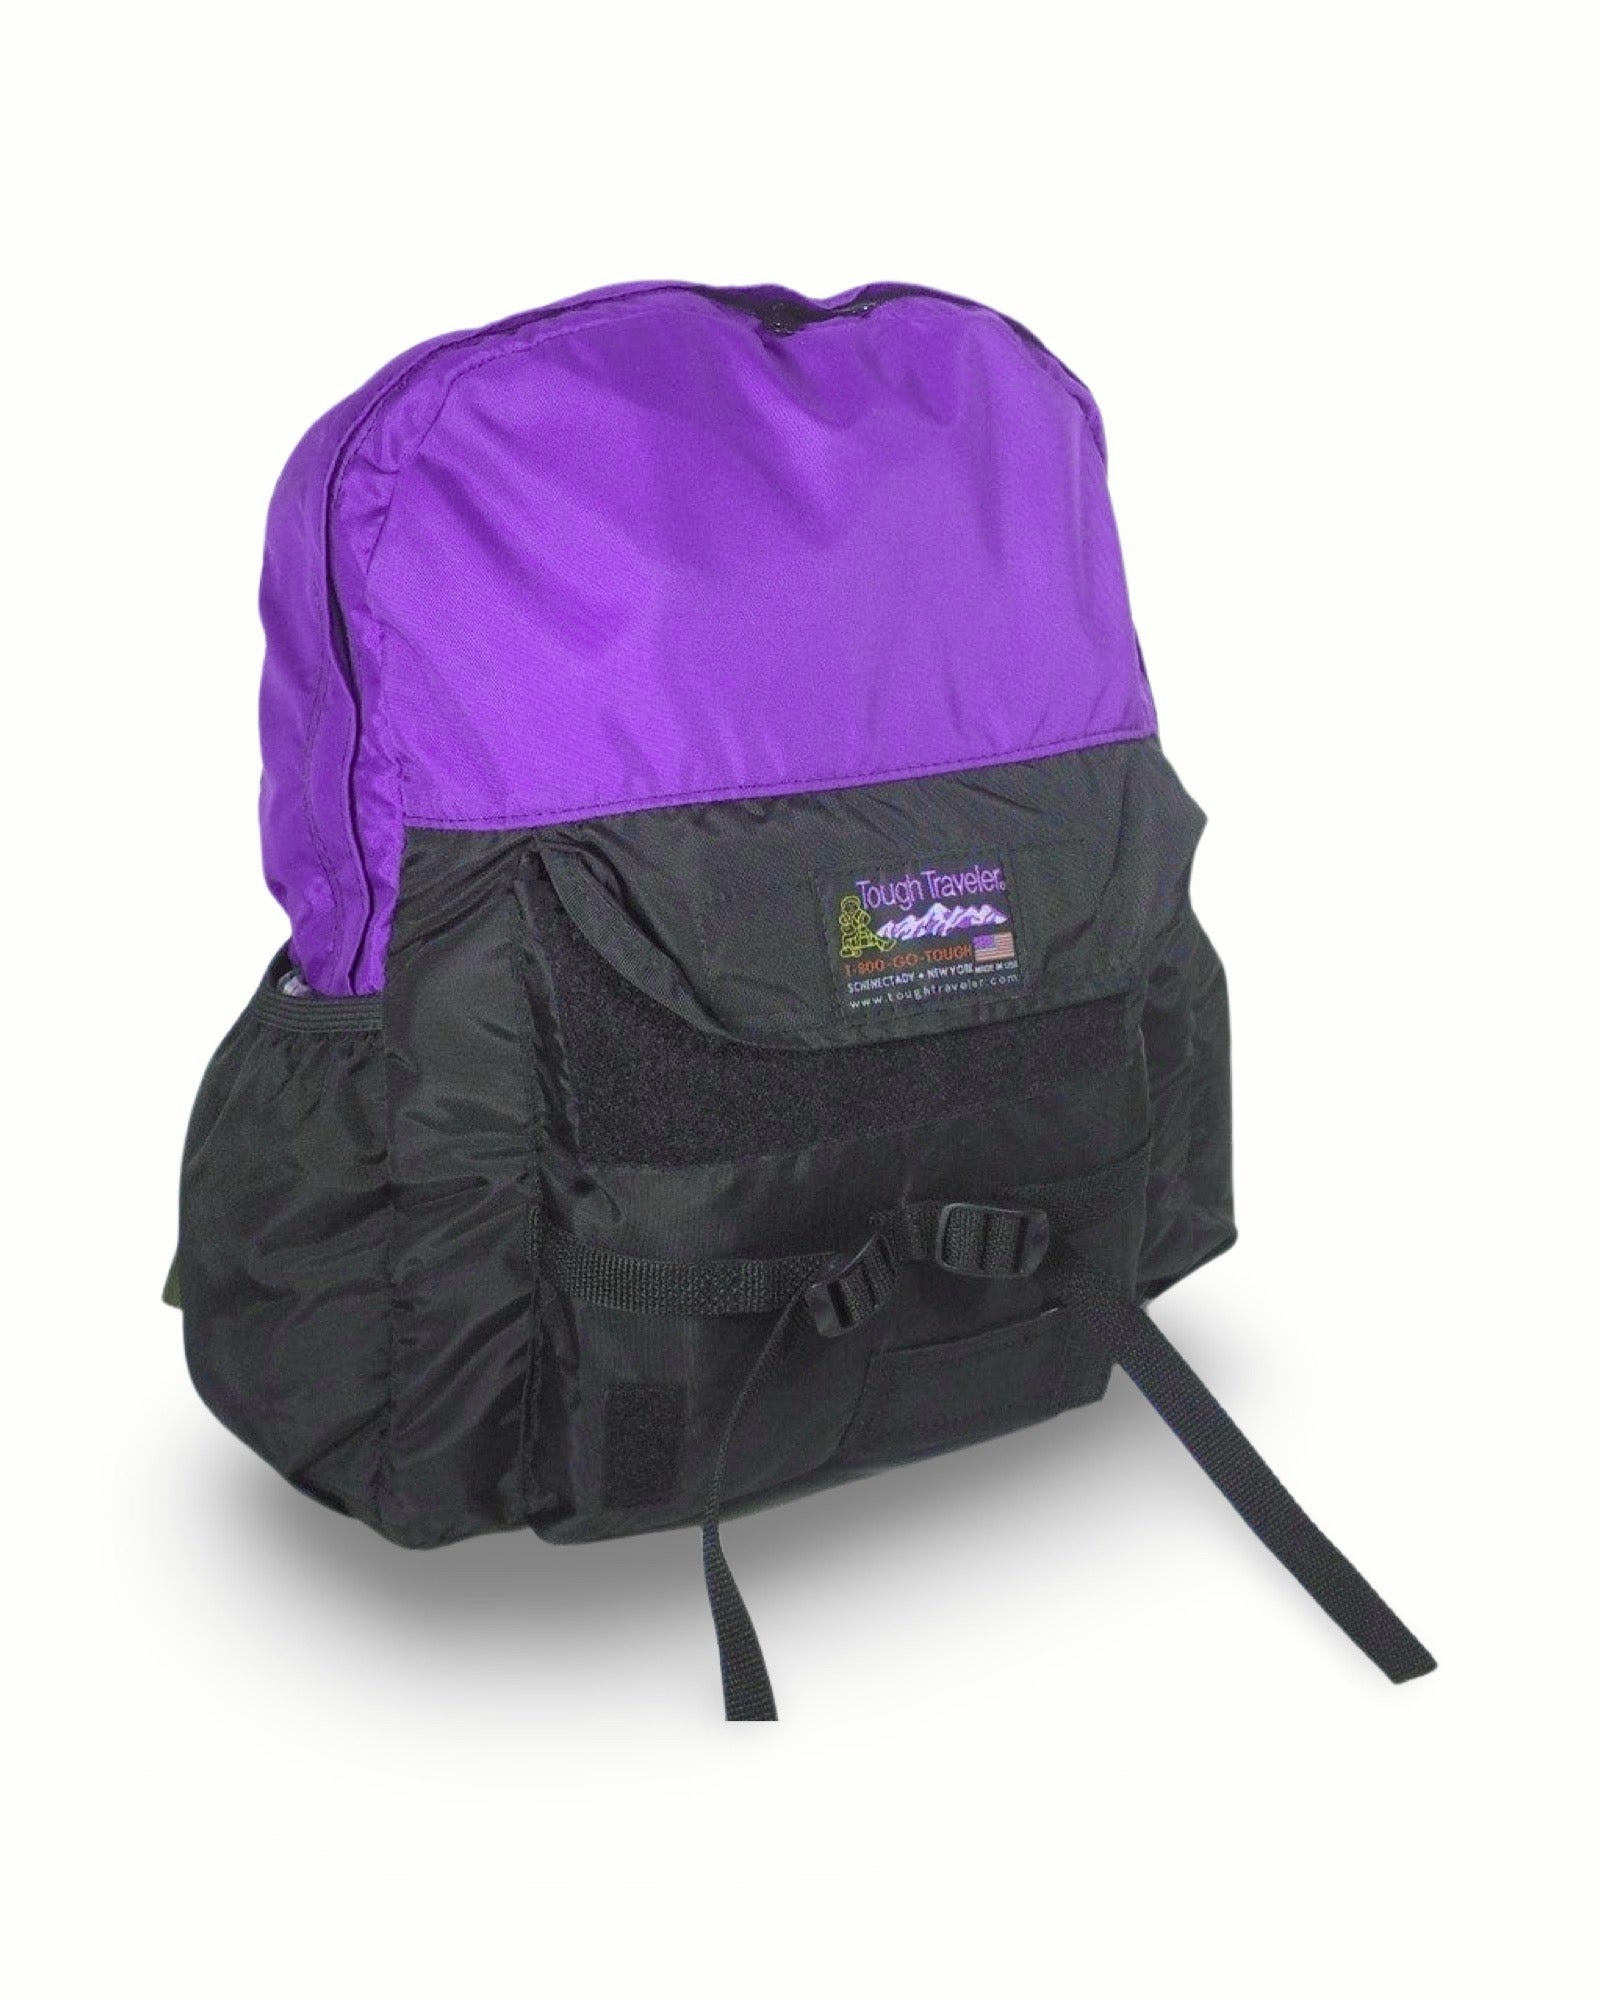 TREKKER-M Minimalist Backpacks, by Tough Traveler. Made in USA since 1970